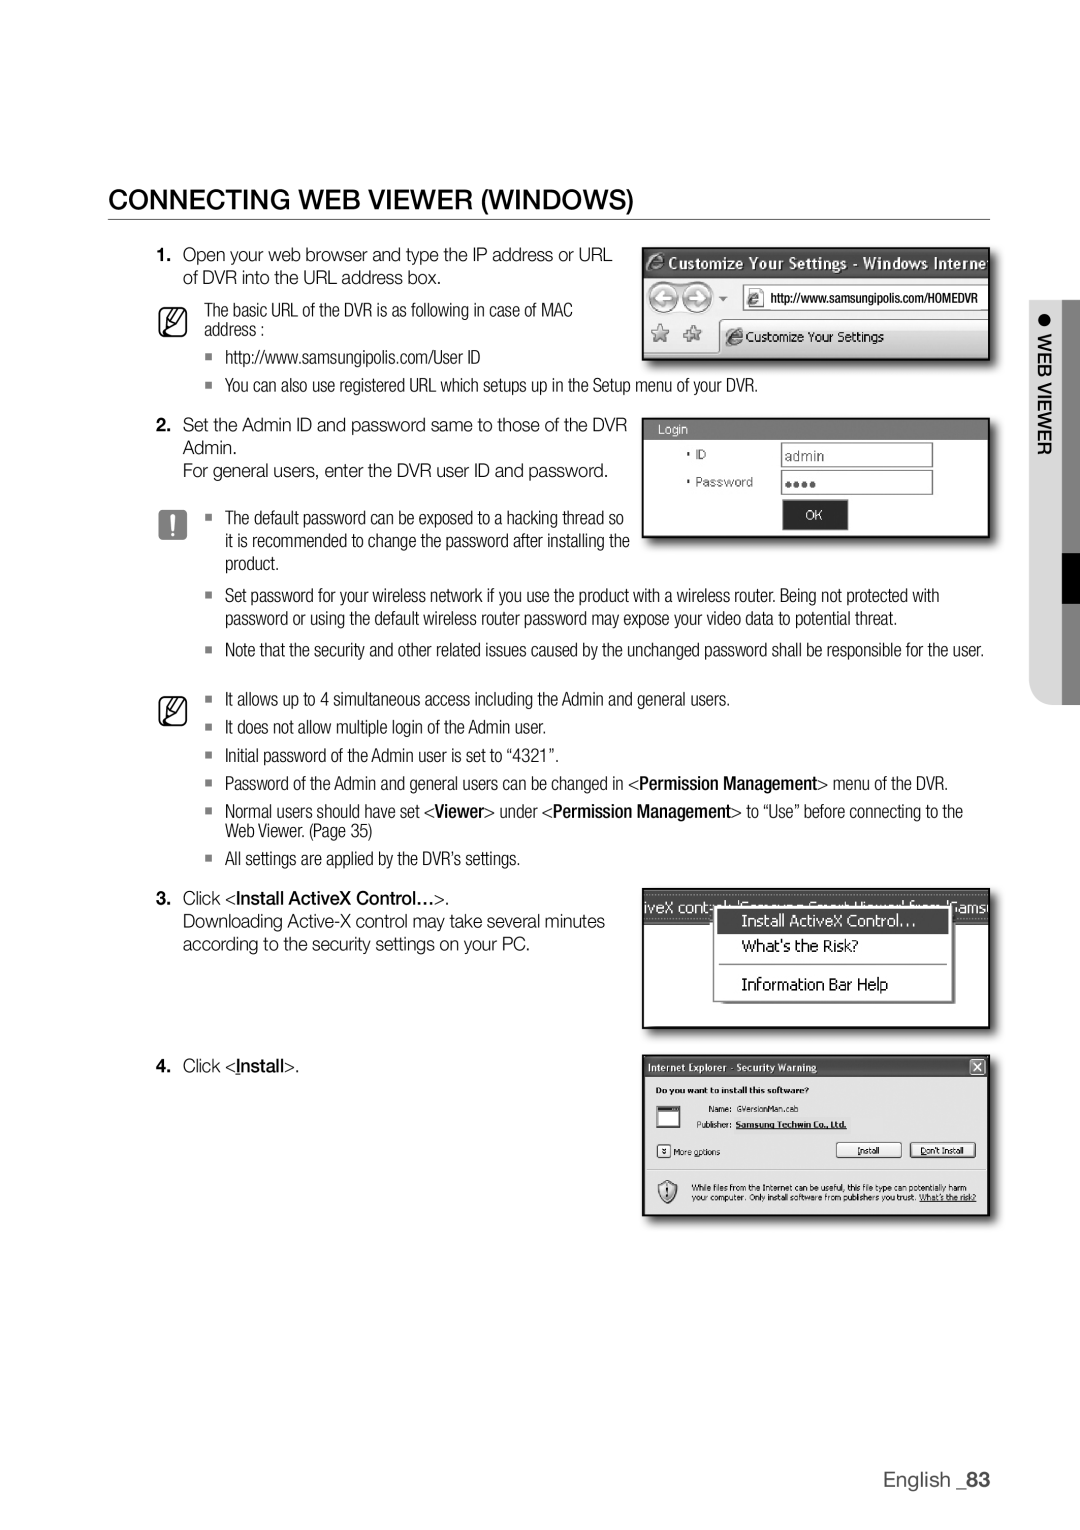 Samsung SDR3100 user manual connectIng Web VIeWer WIndoWS, English _83 